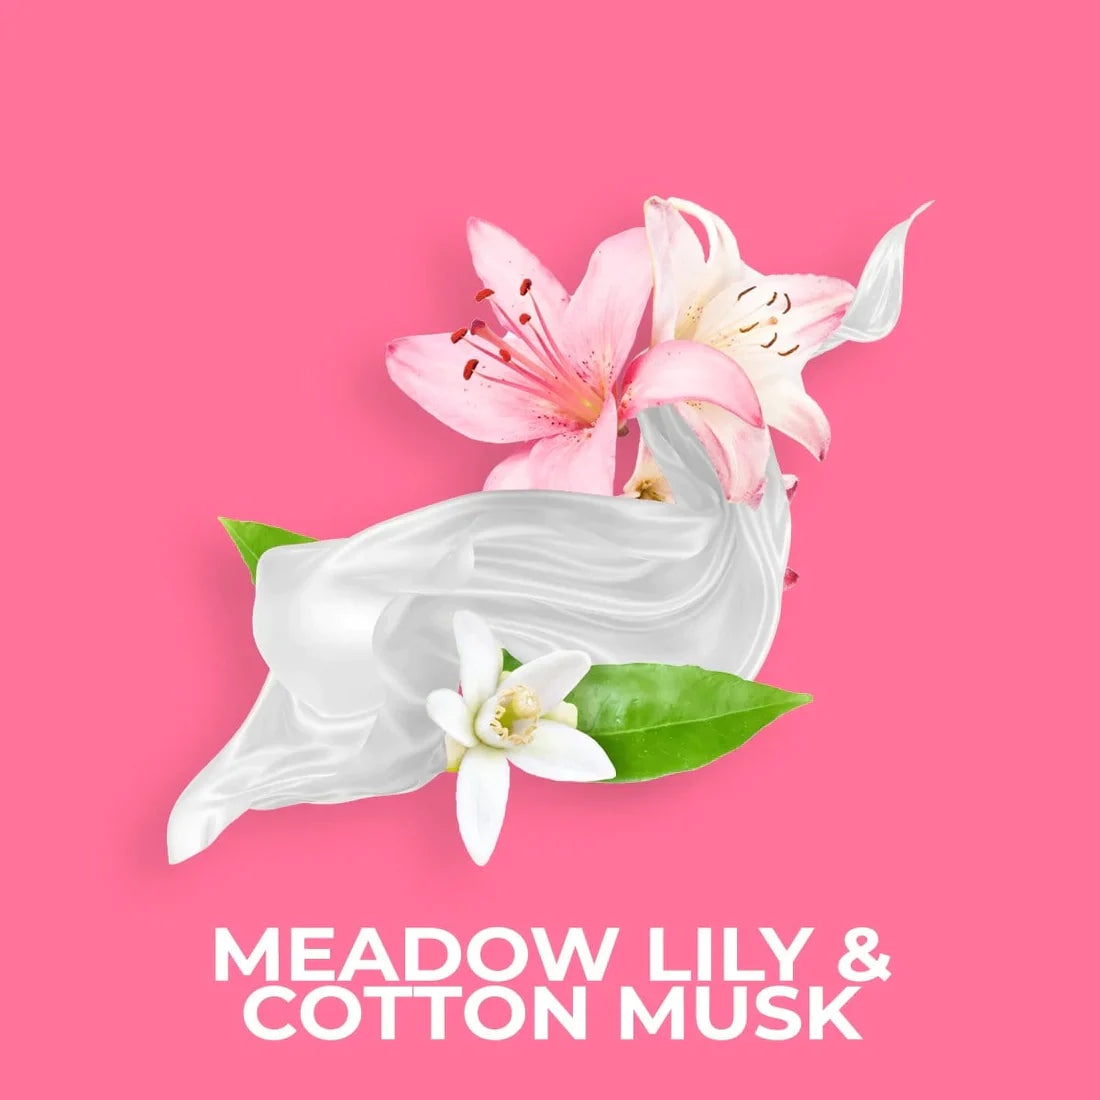 Meadow Lilly & Cotton Musk 20g Shot Pot